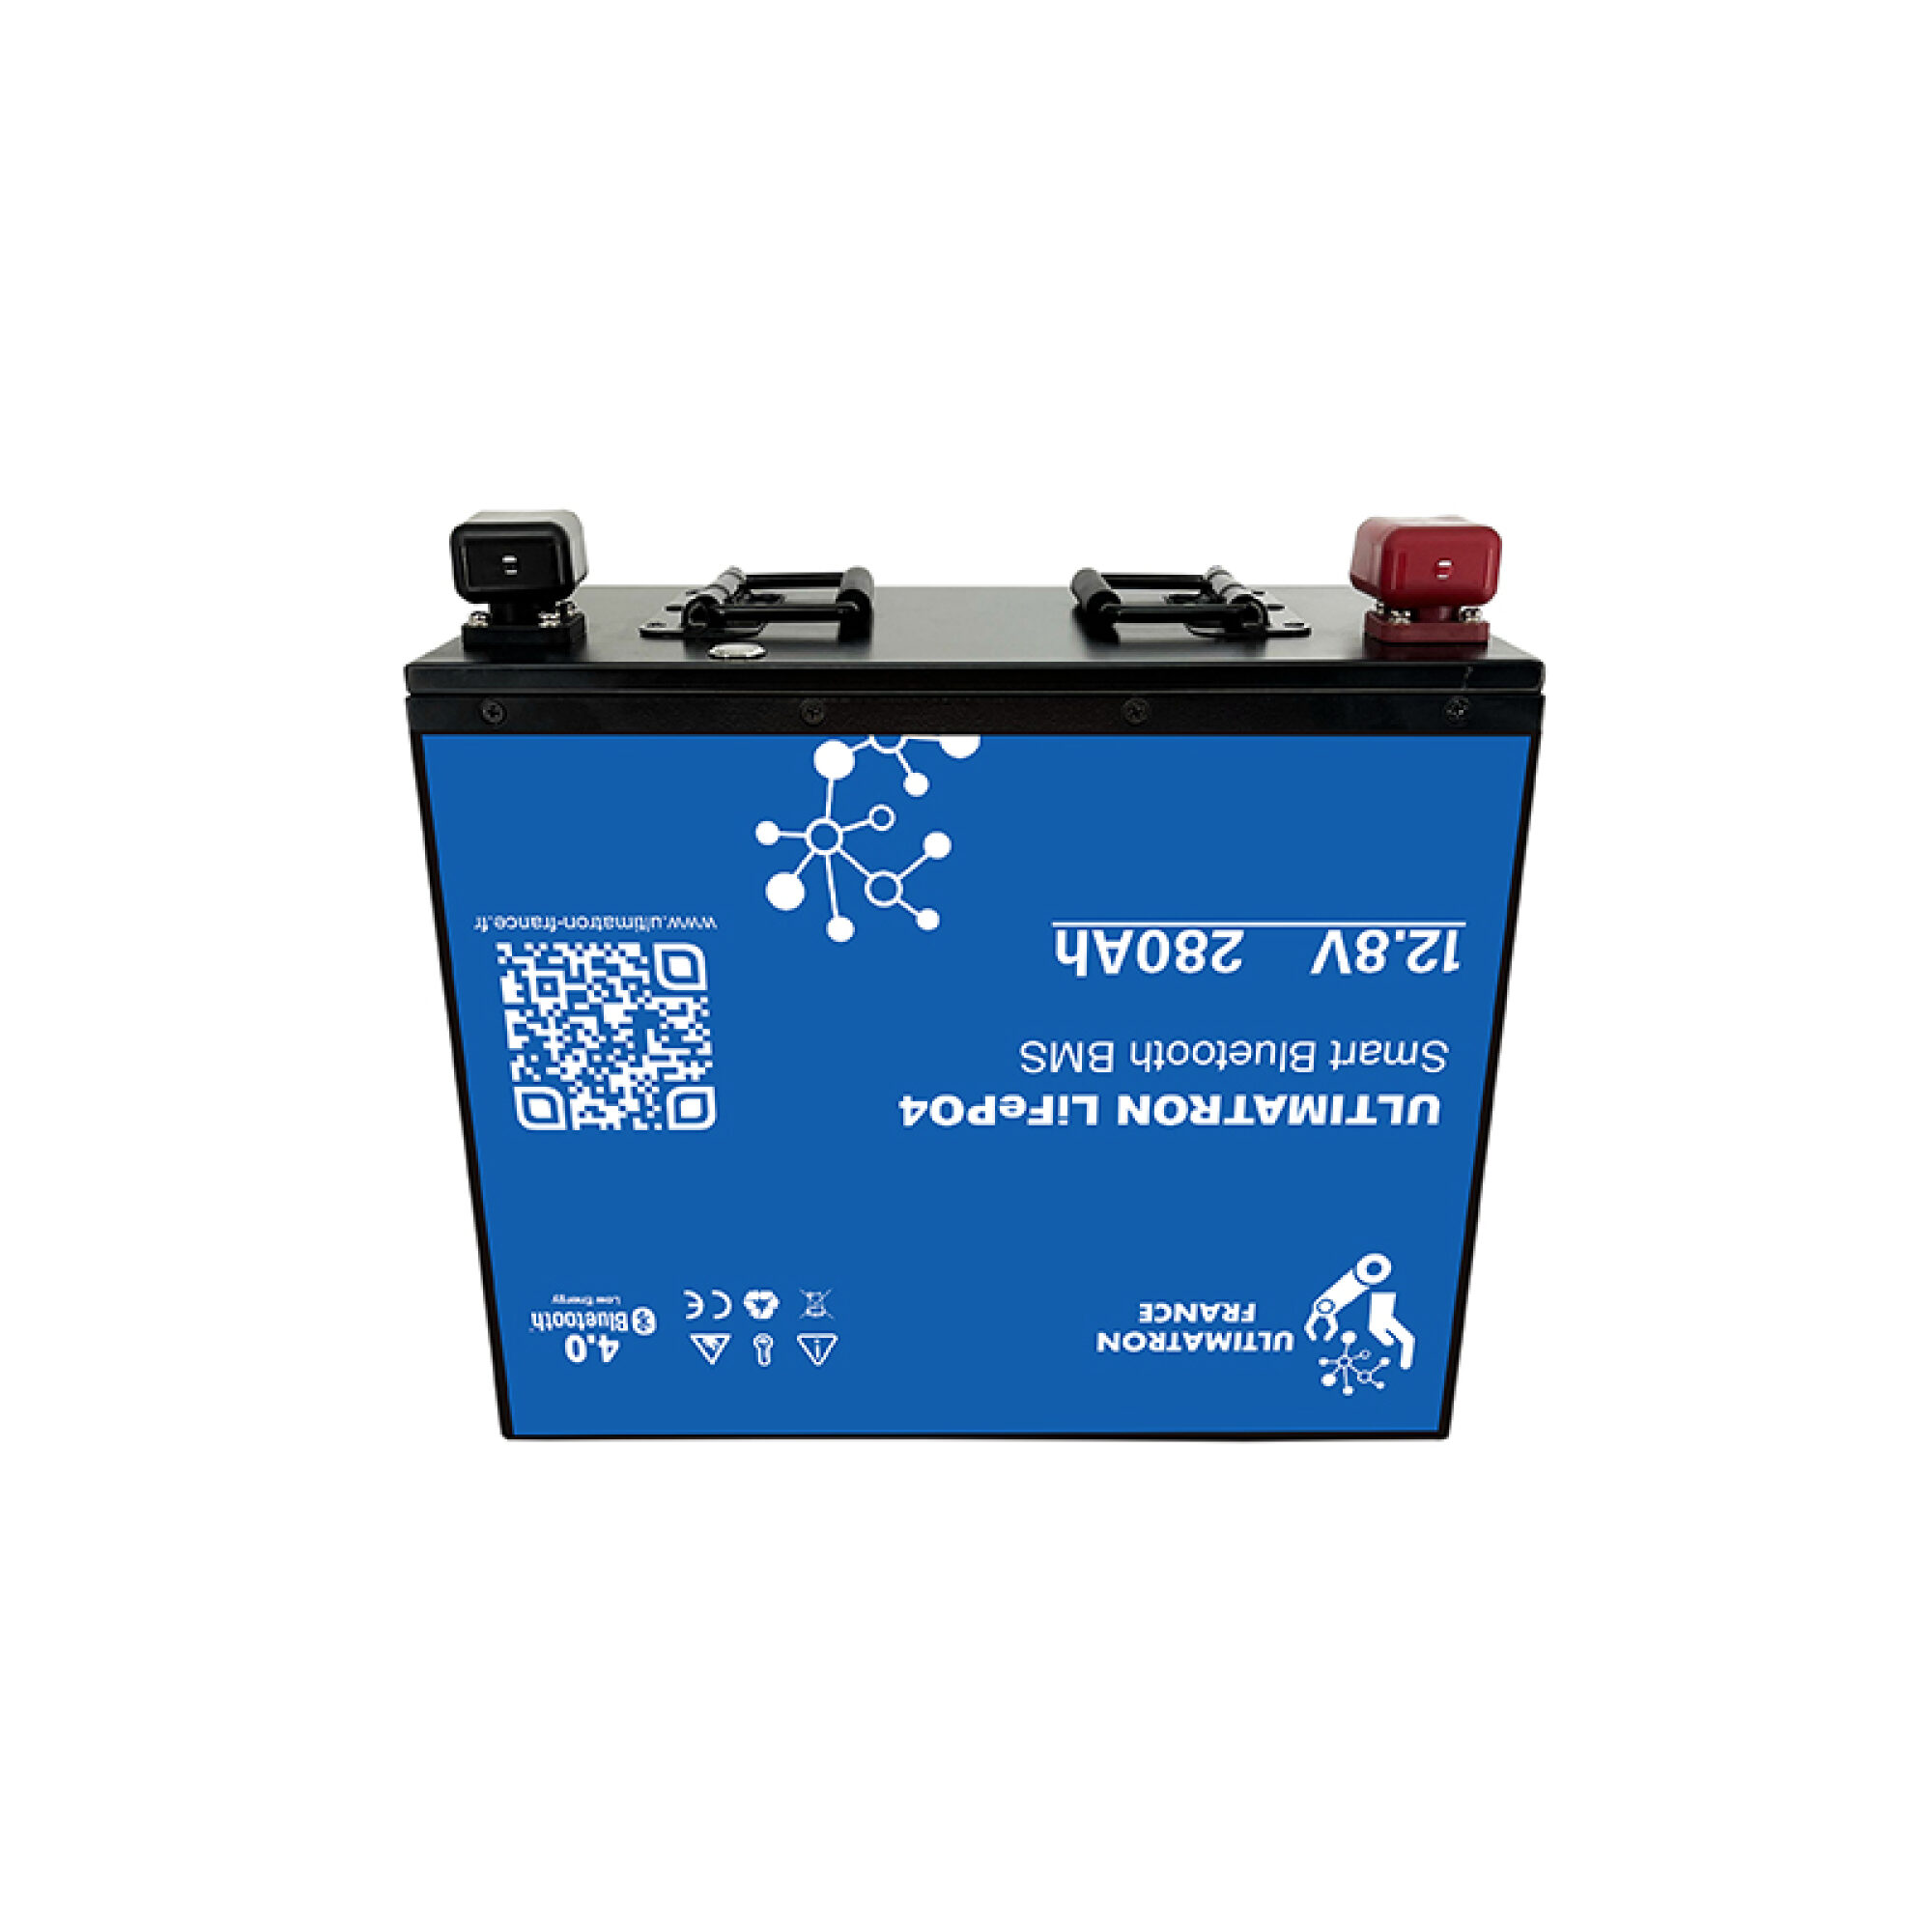 Ultimatron LiFePO4 Untersitz-12.8V 280Ah Lithium Batterie Smart BMS mit Bluetooth Wohnmobil Untersitzbatterie